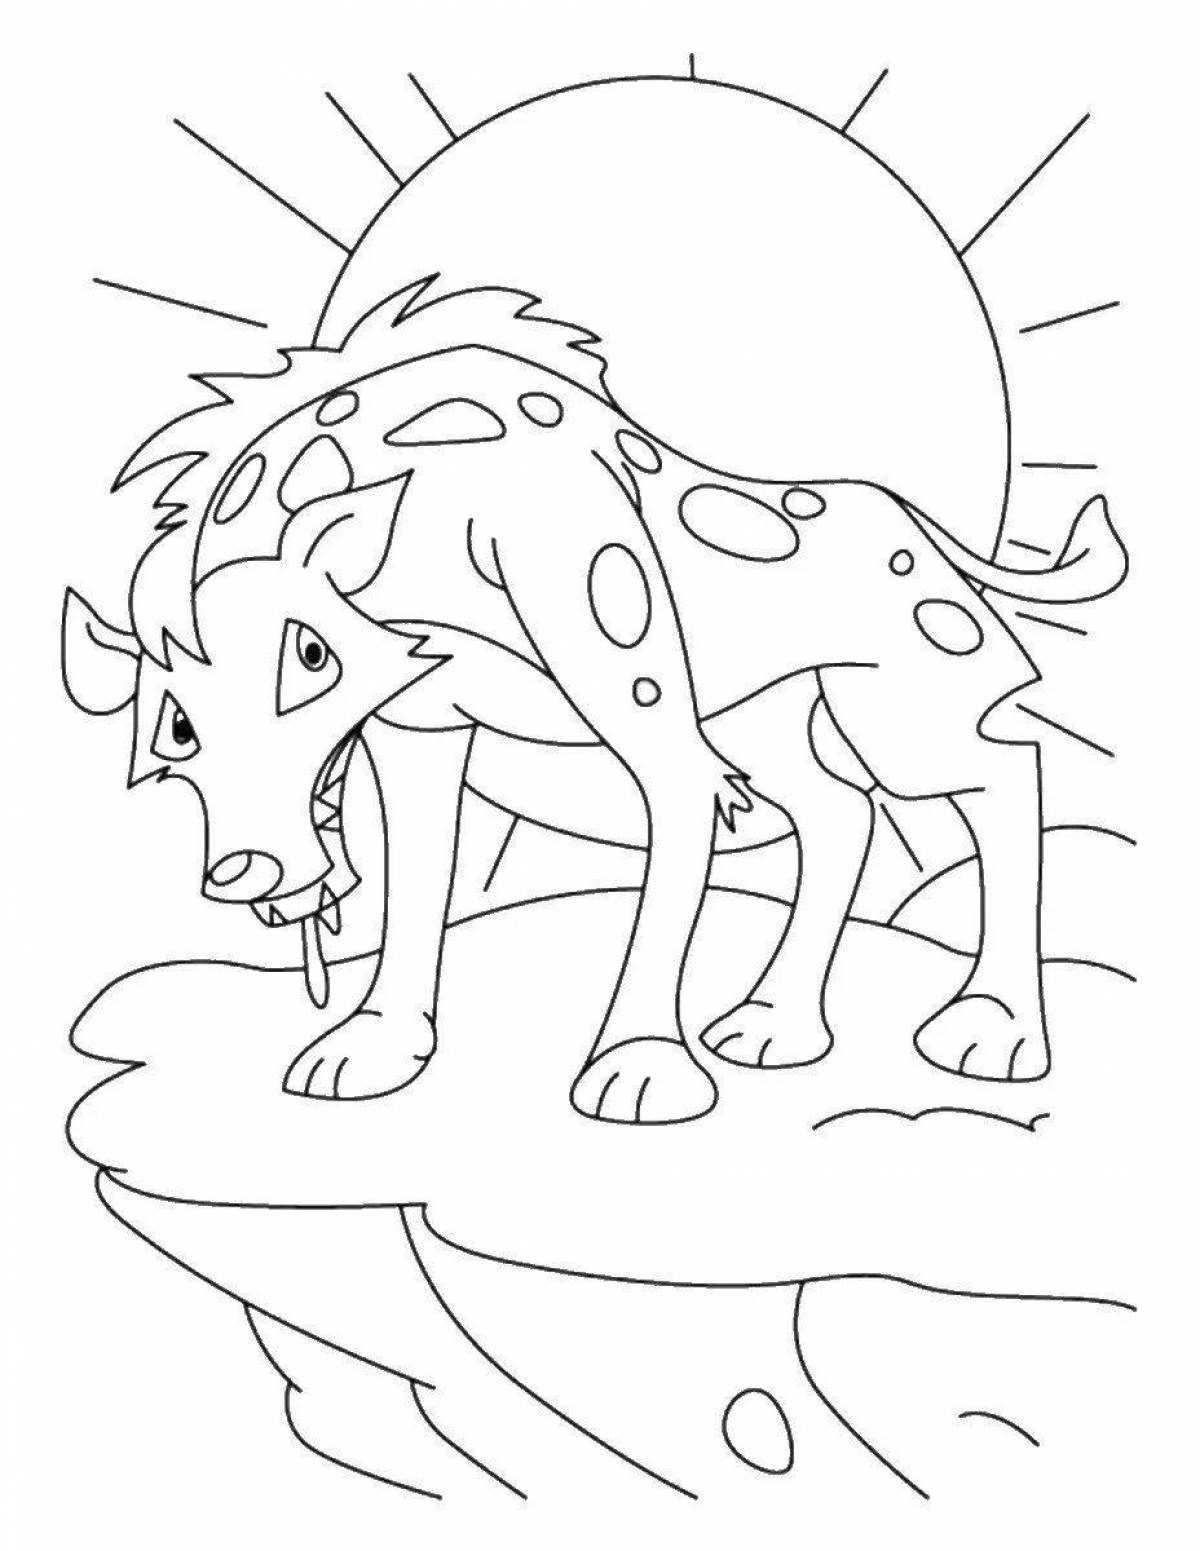 Adorable jackal coloring page